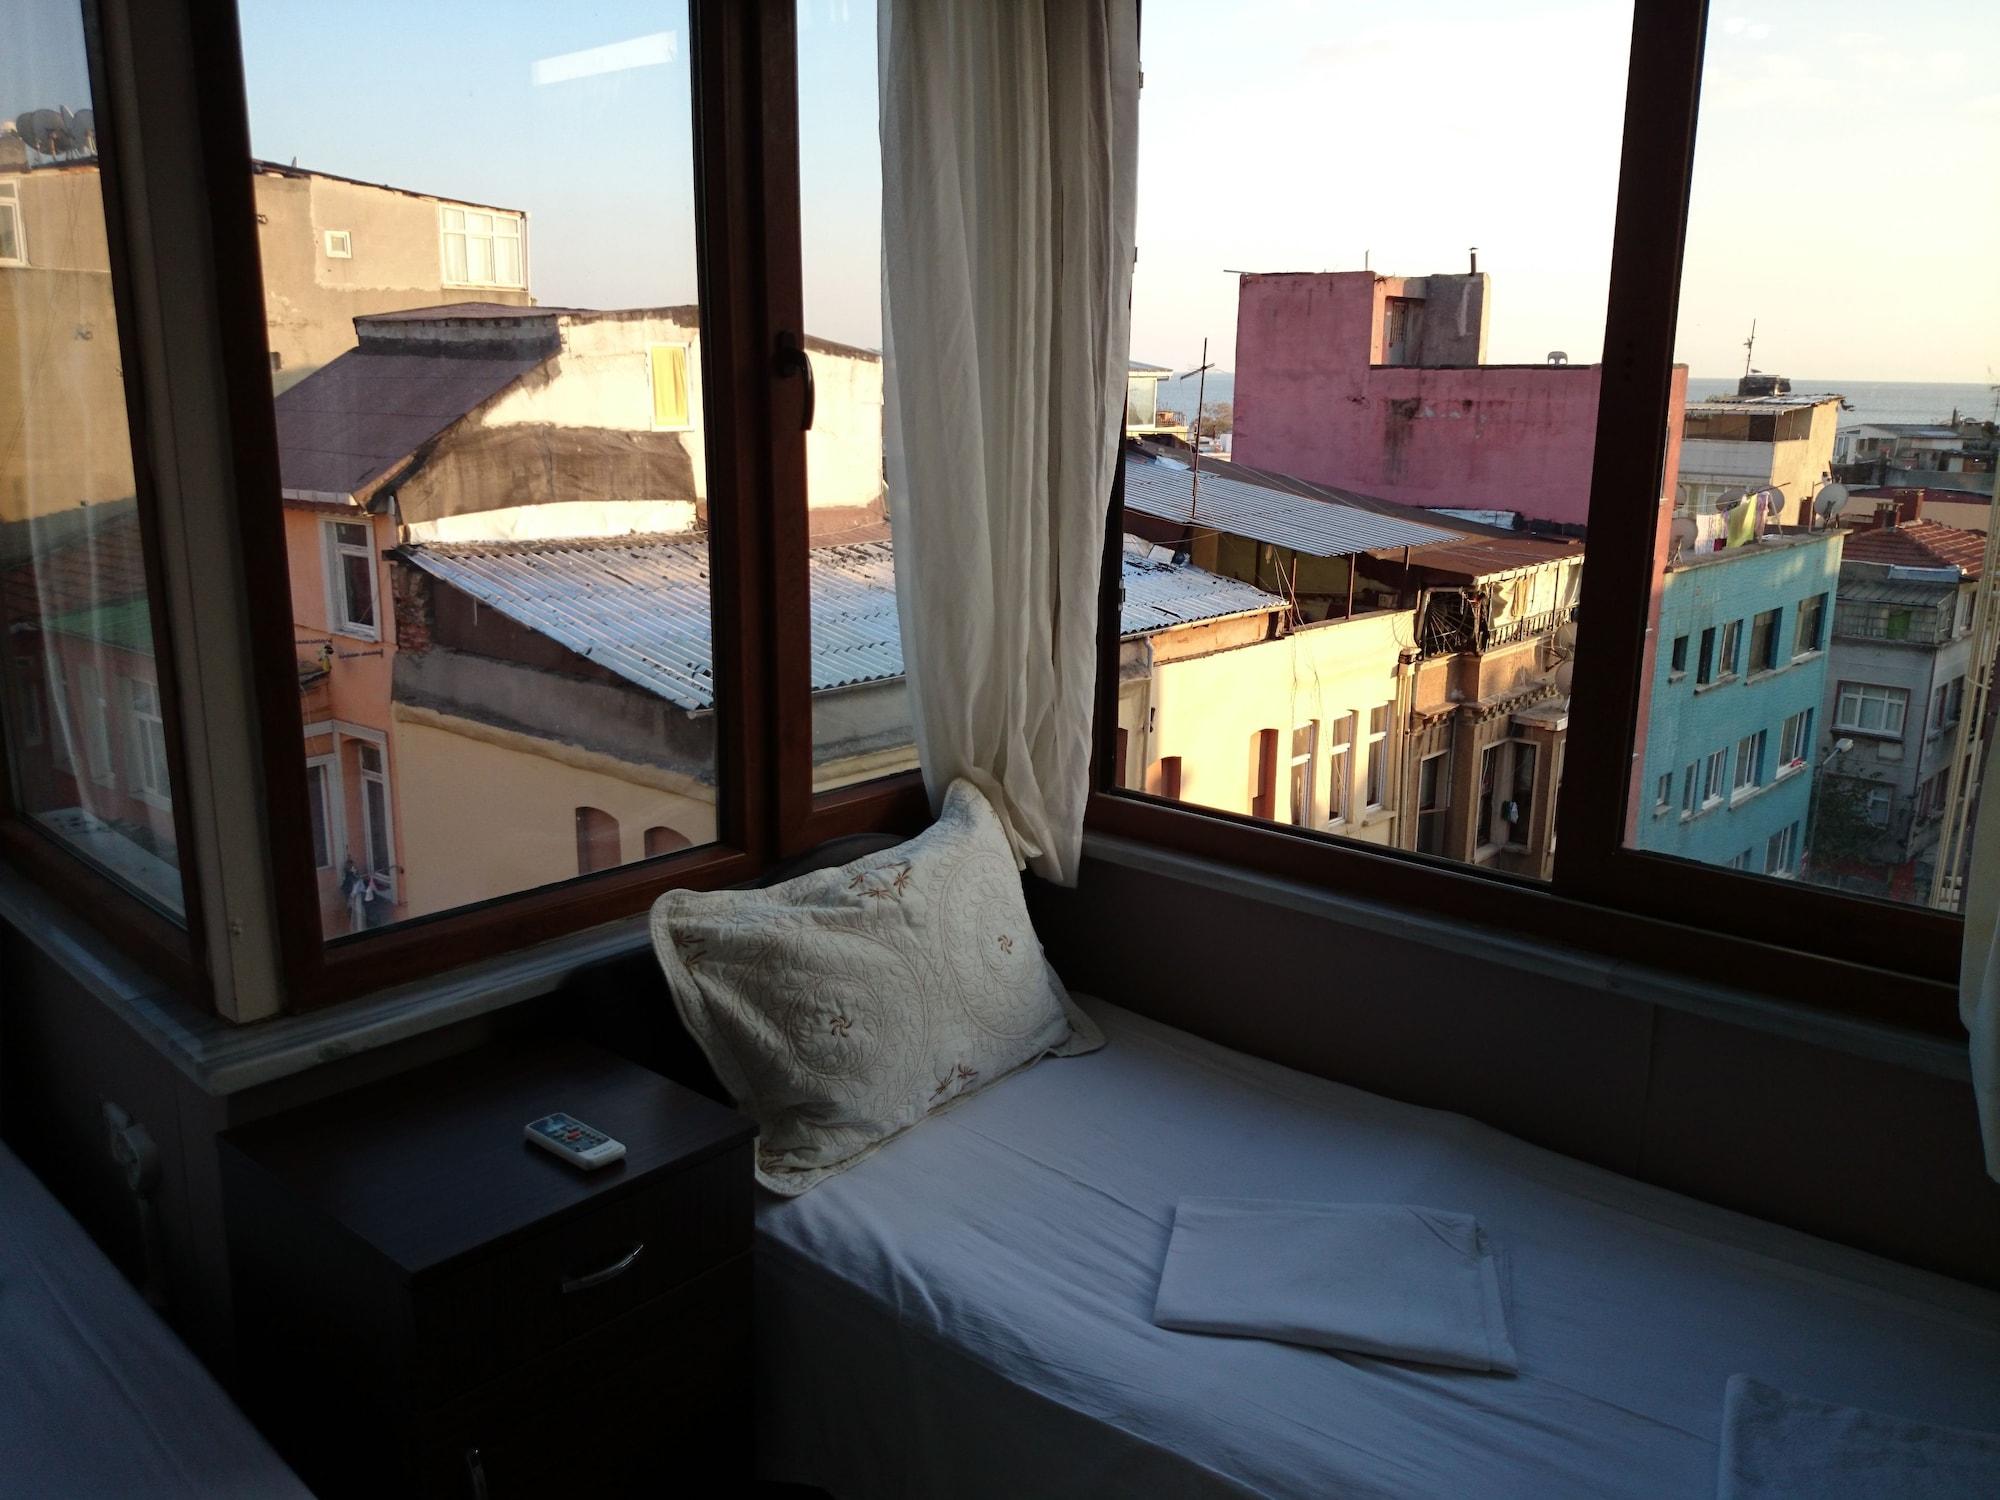 Hotel Yasmin Istanbul Exterior foto